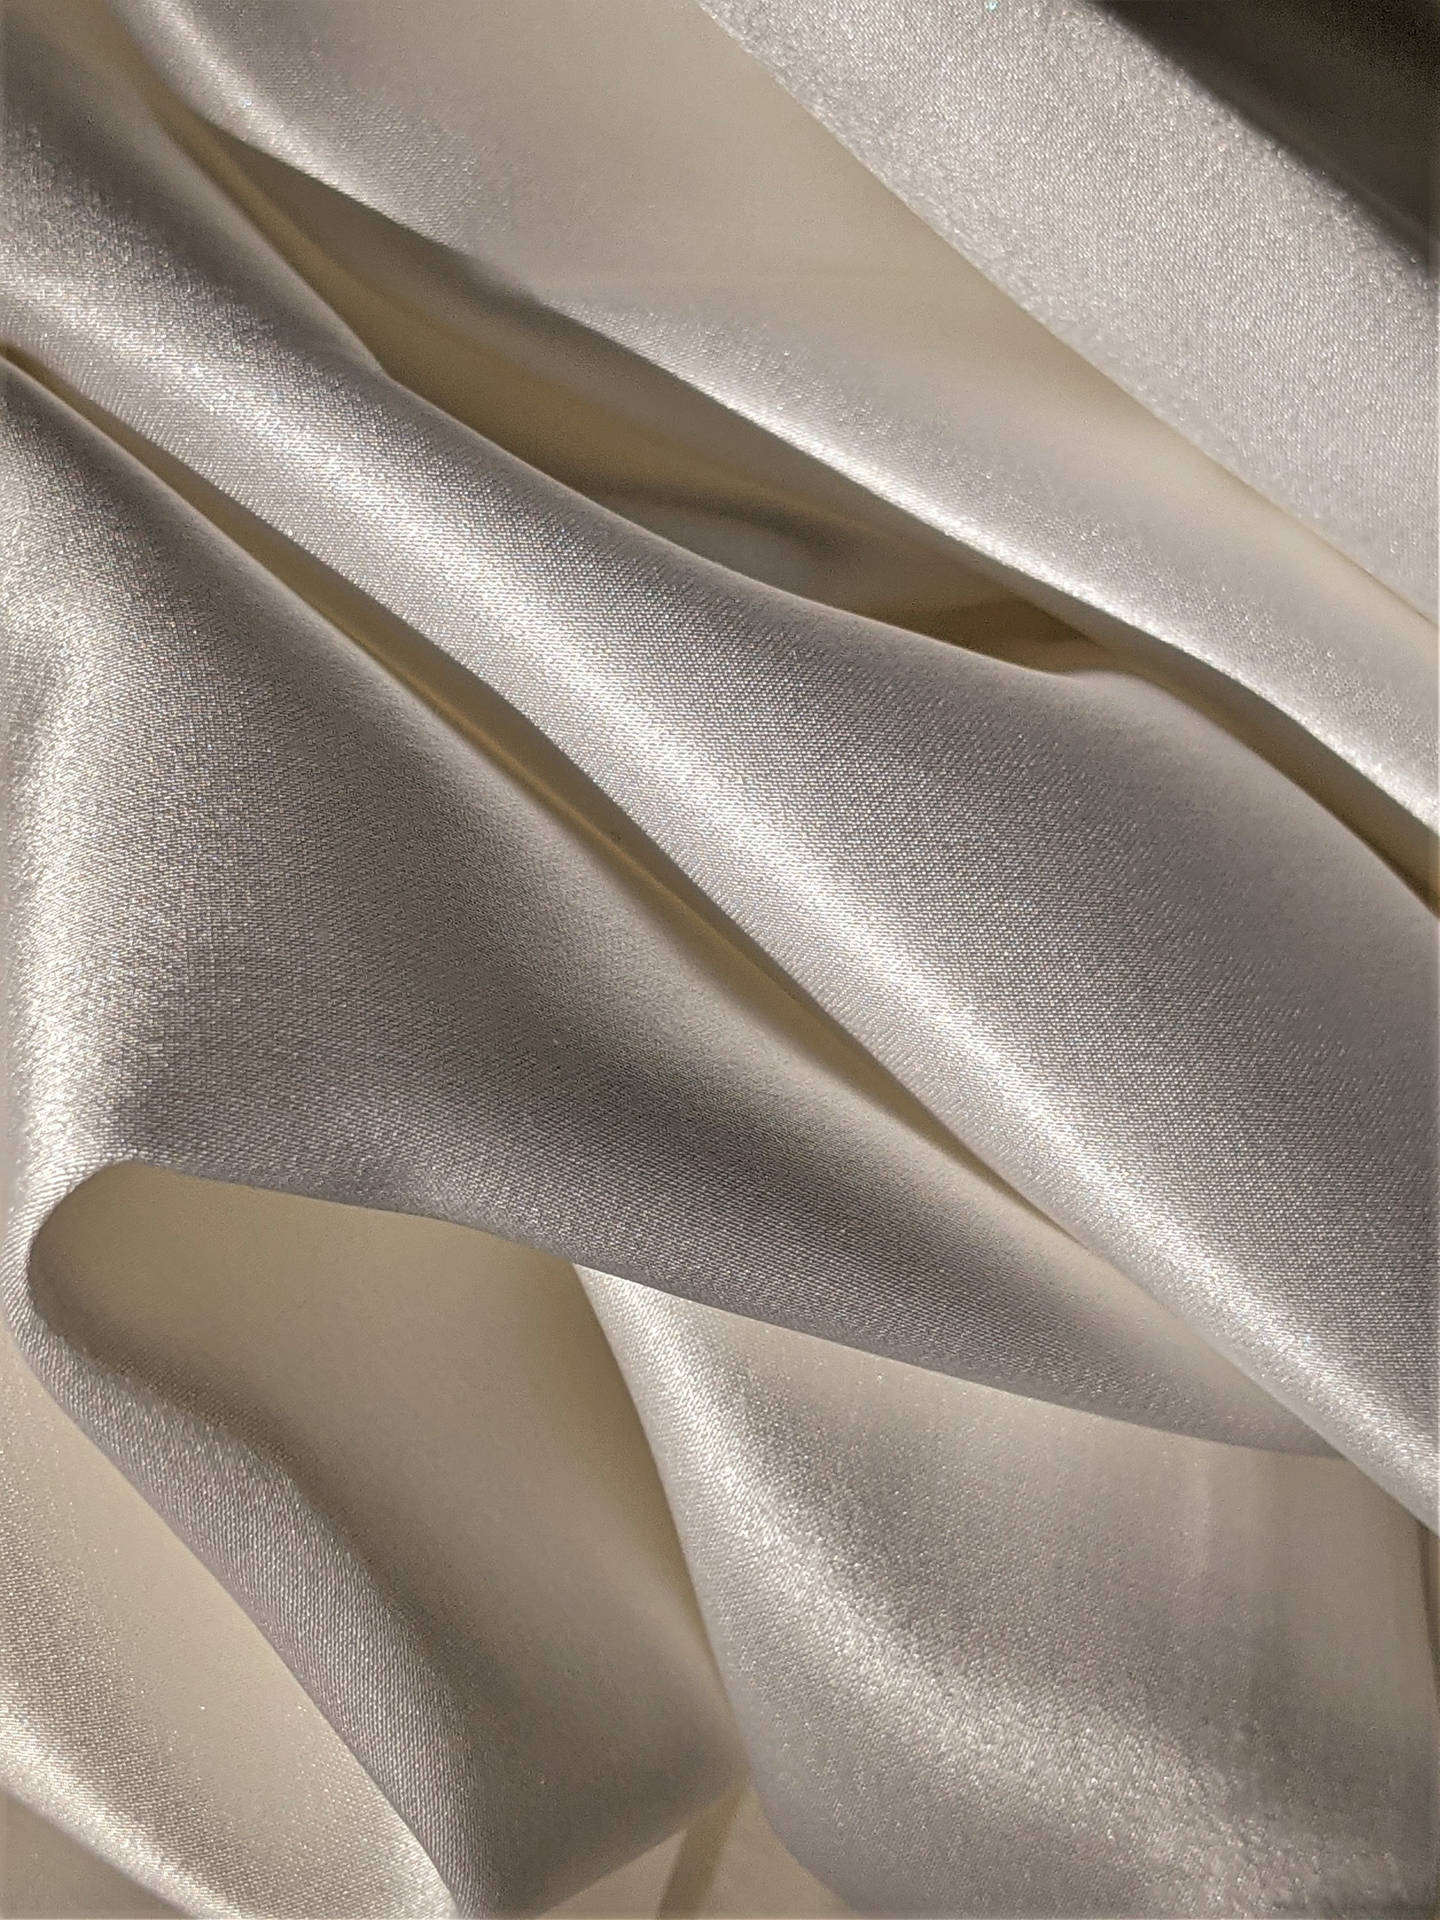 Off White Satin Silk Fabric Background